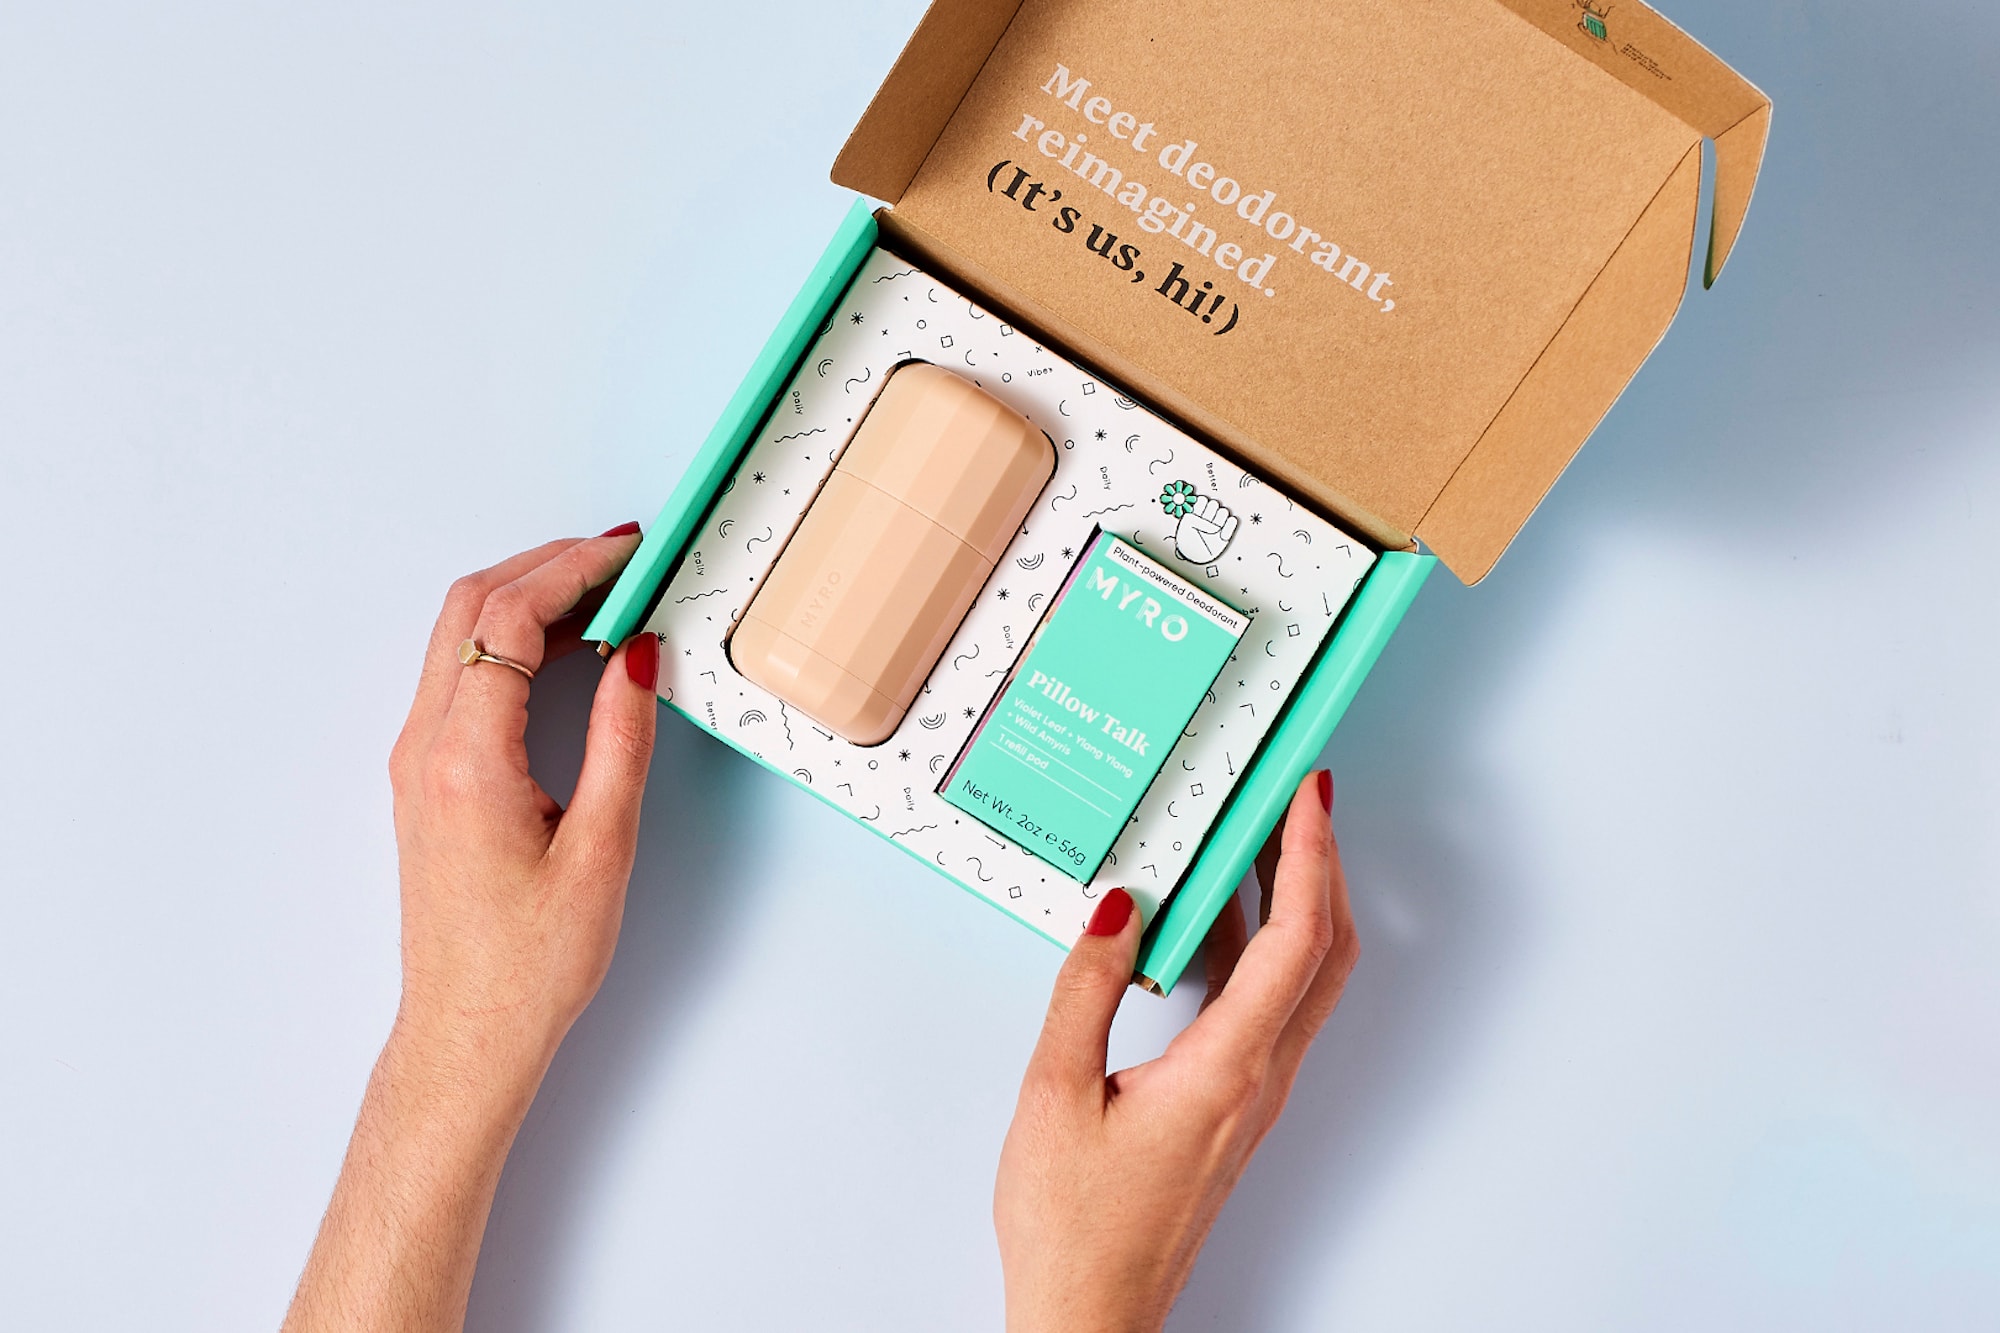 Myro Plant-Based Sustainable Vegan Deodorant Aesthetic Beauty Skincare Range